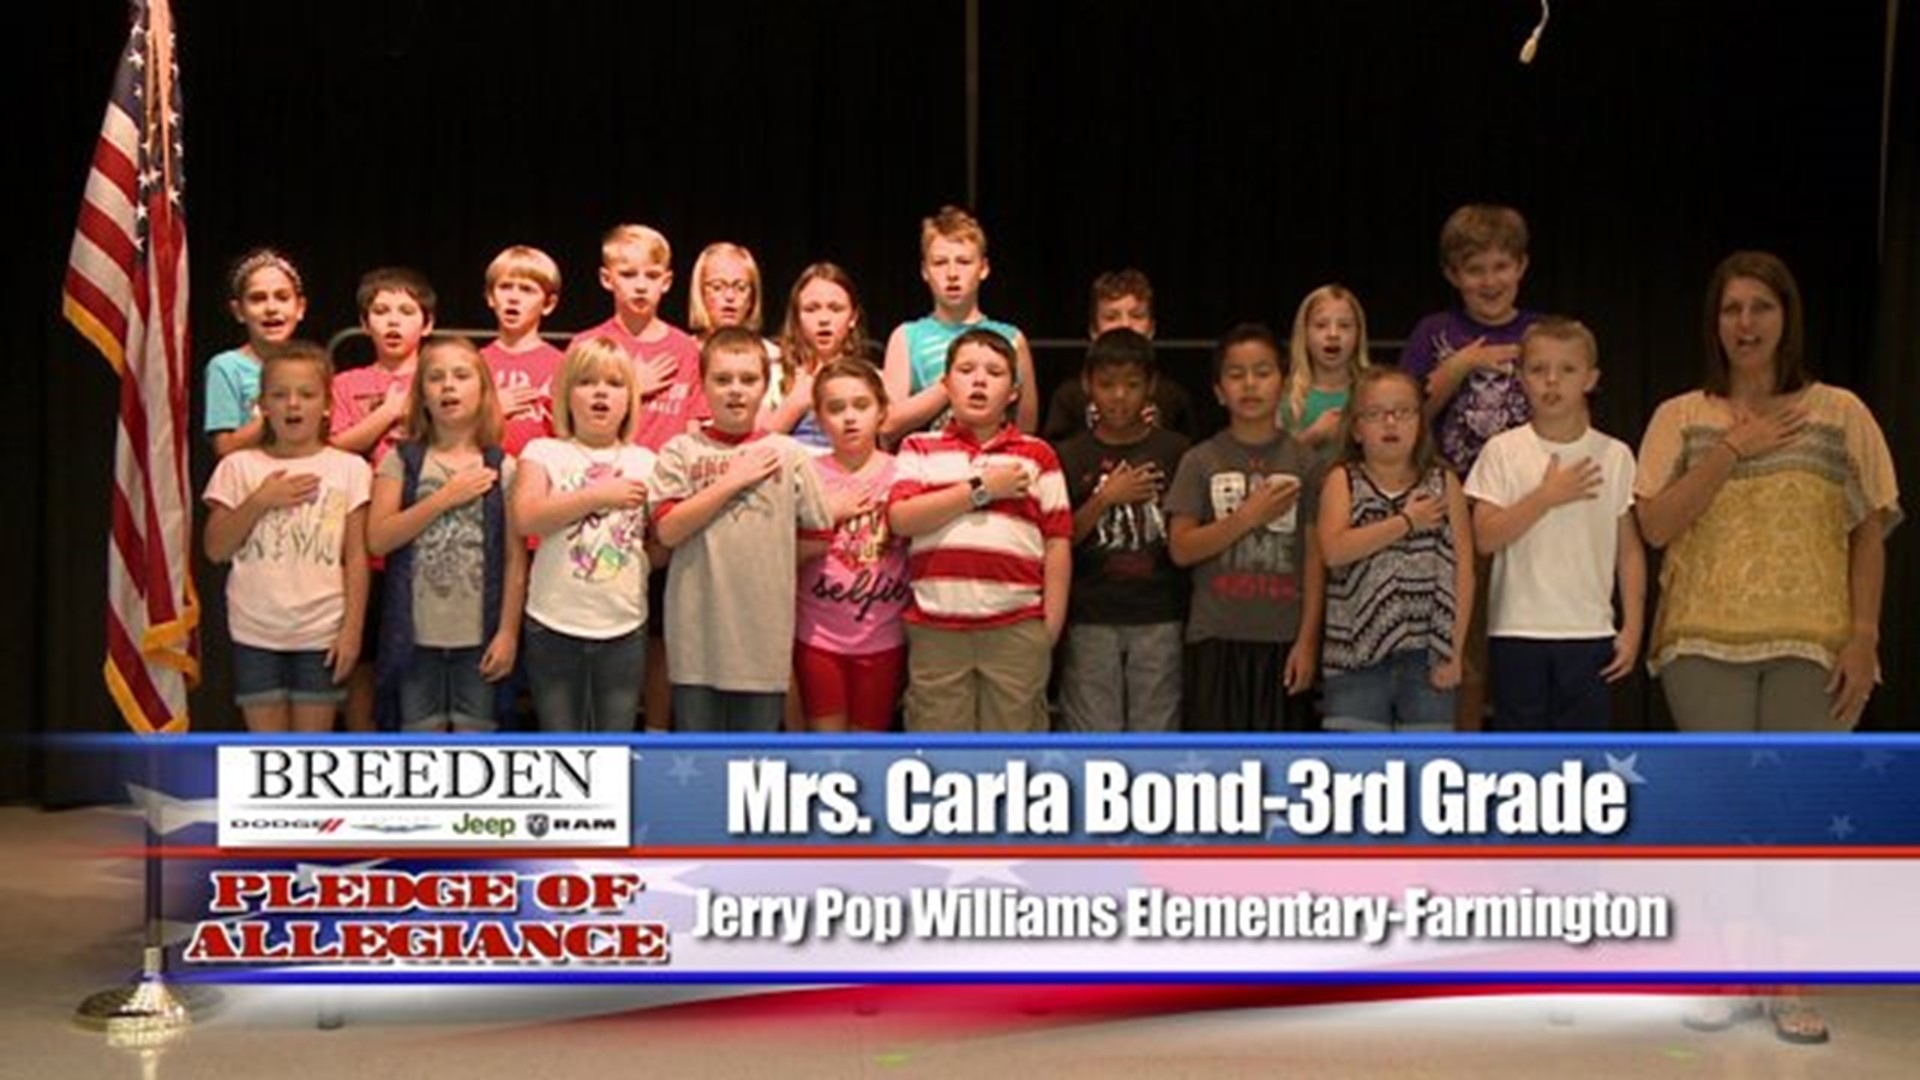 Jerry Pop Williams Elementary  Farmington  Mrs. Carla Bond - 3rd Grade